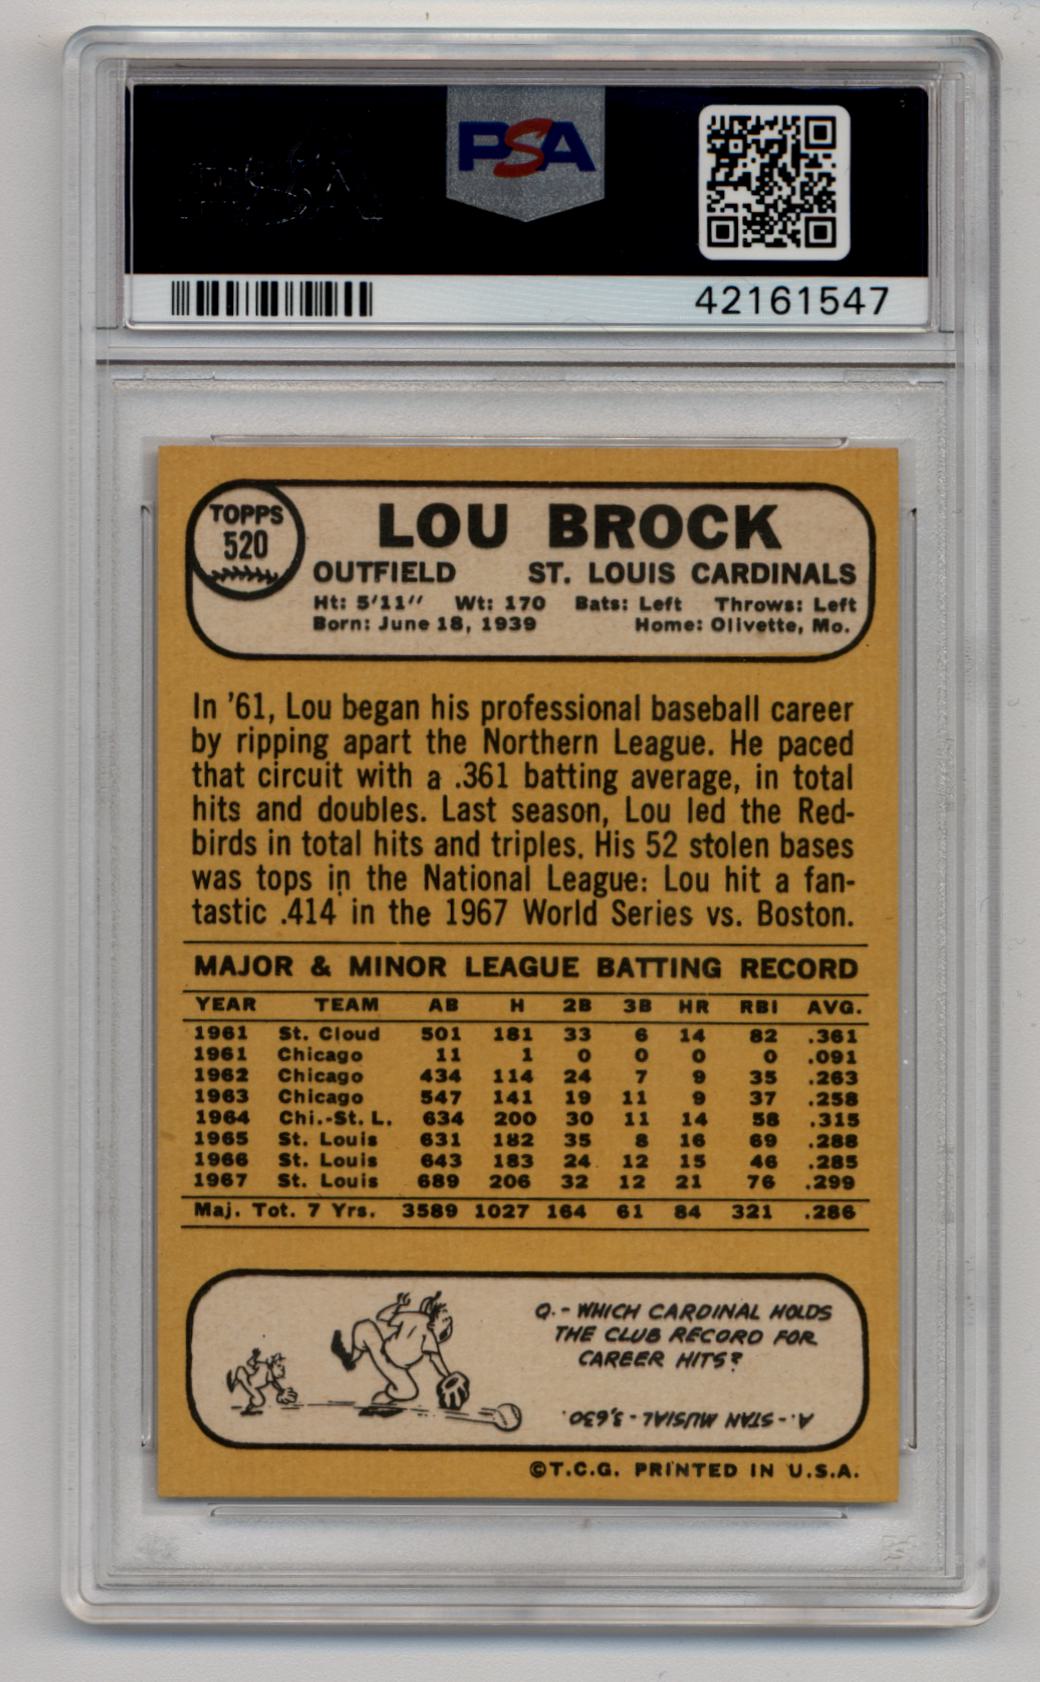 1968 Topps #520 Lou Brock back image